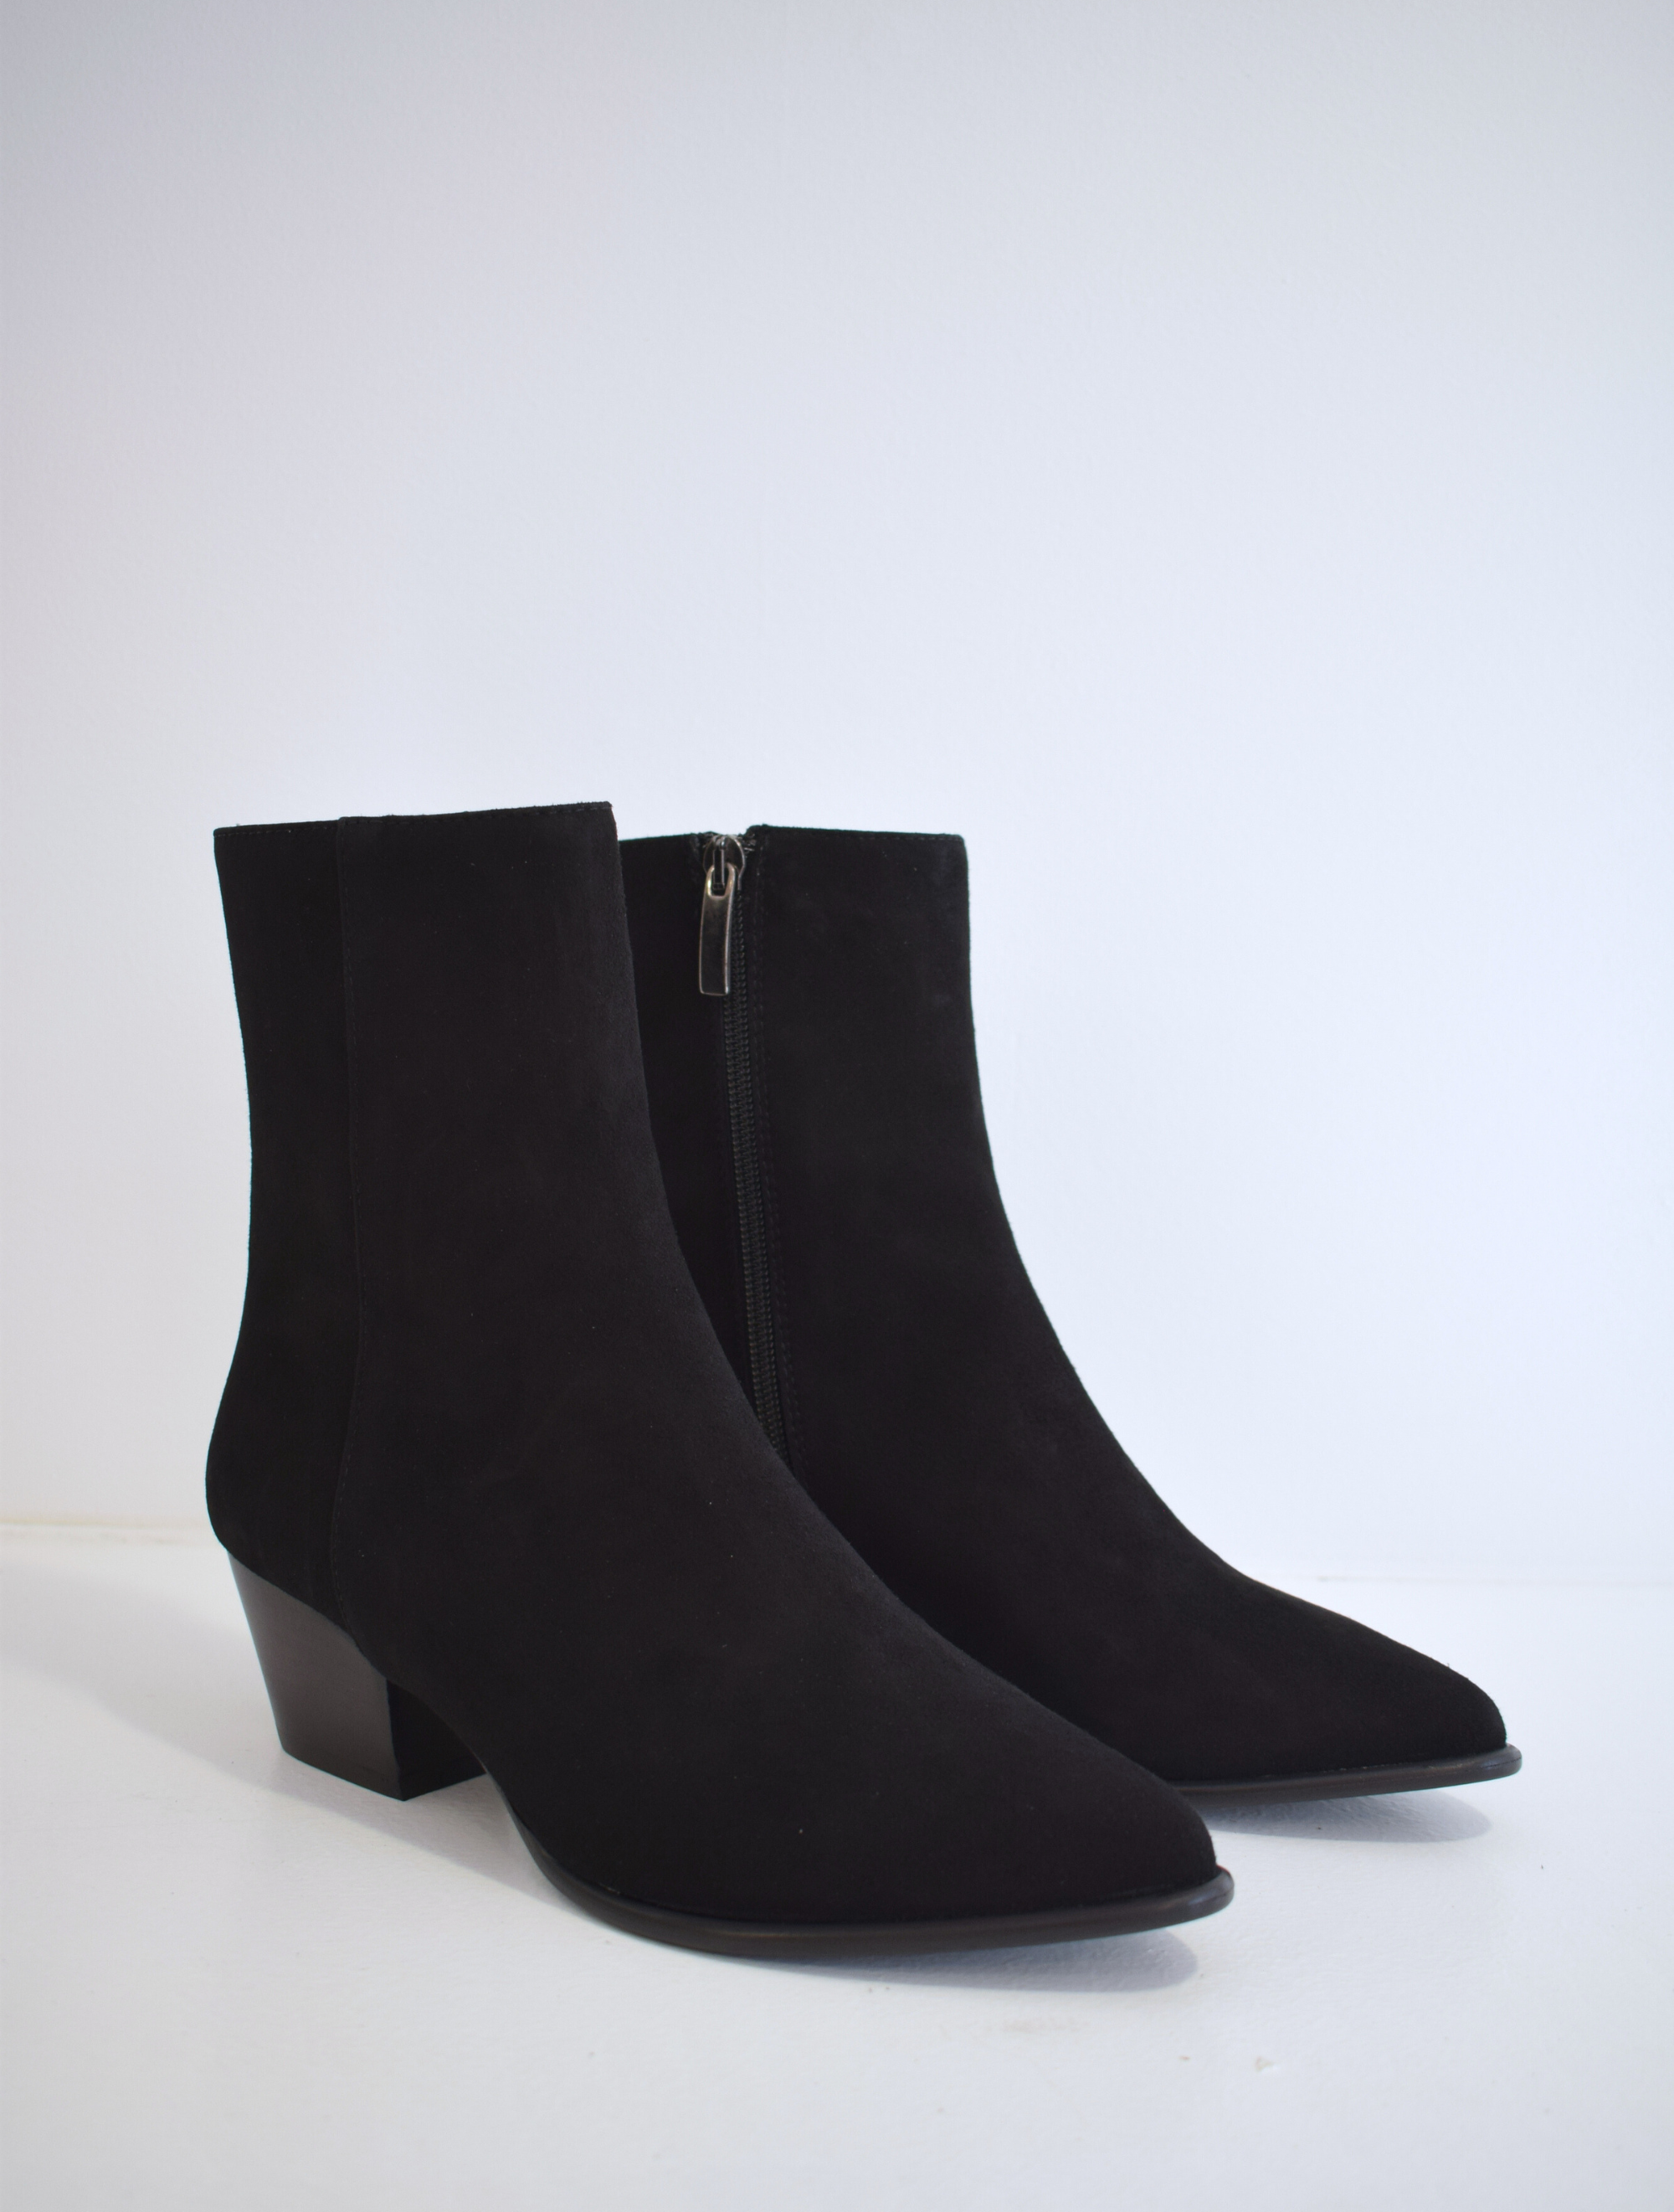 Black suede ankle boot with western block heel